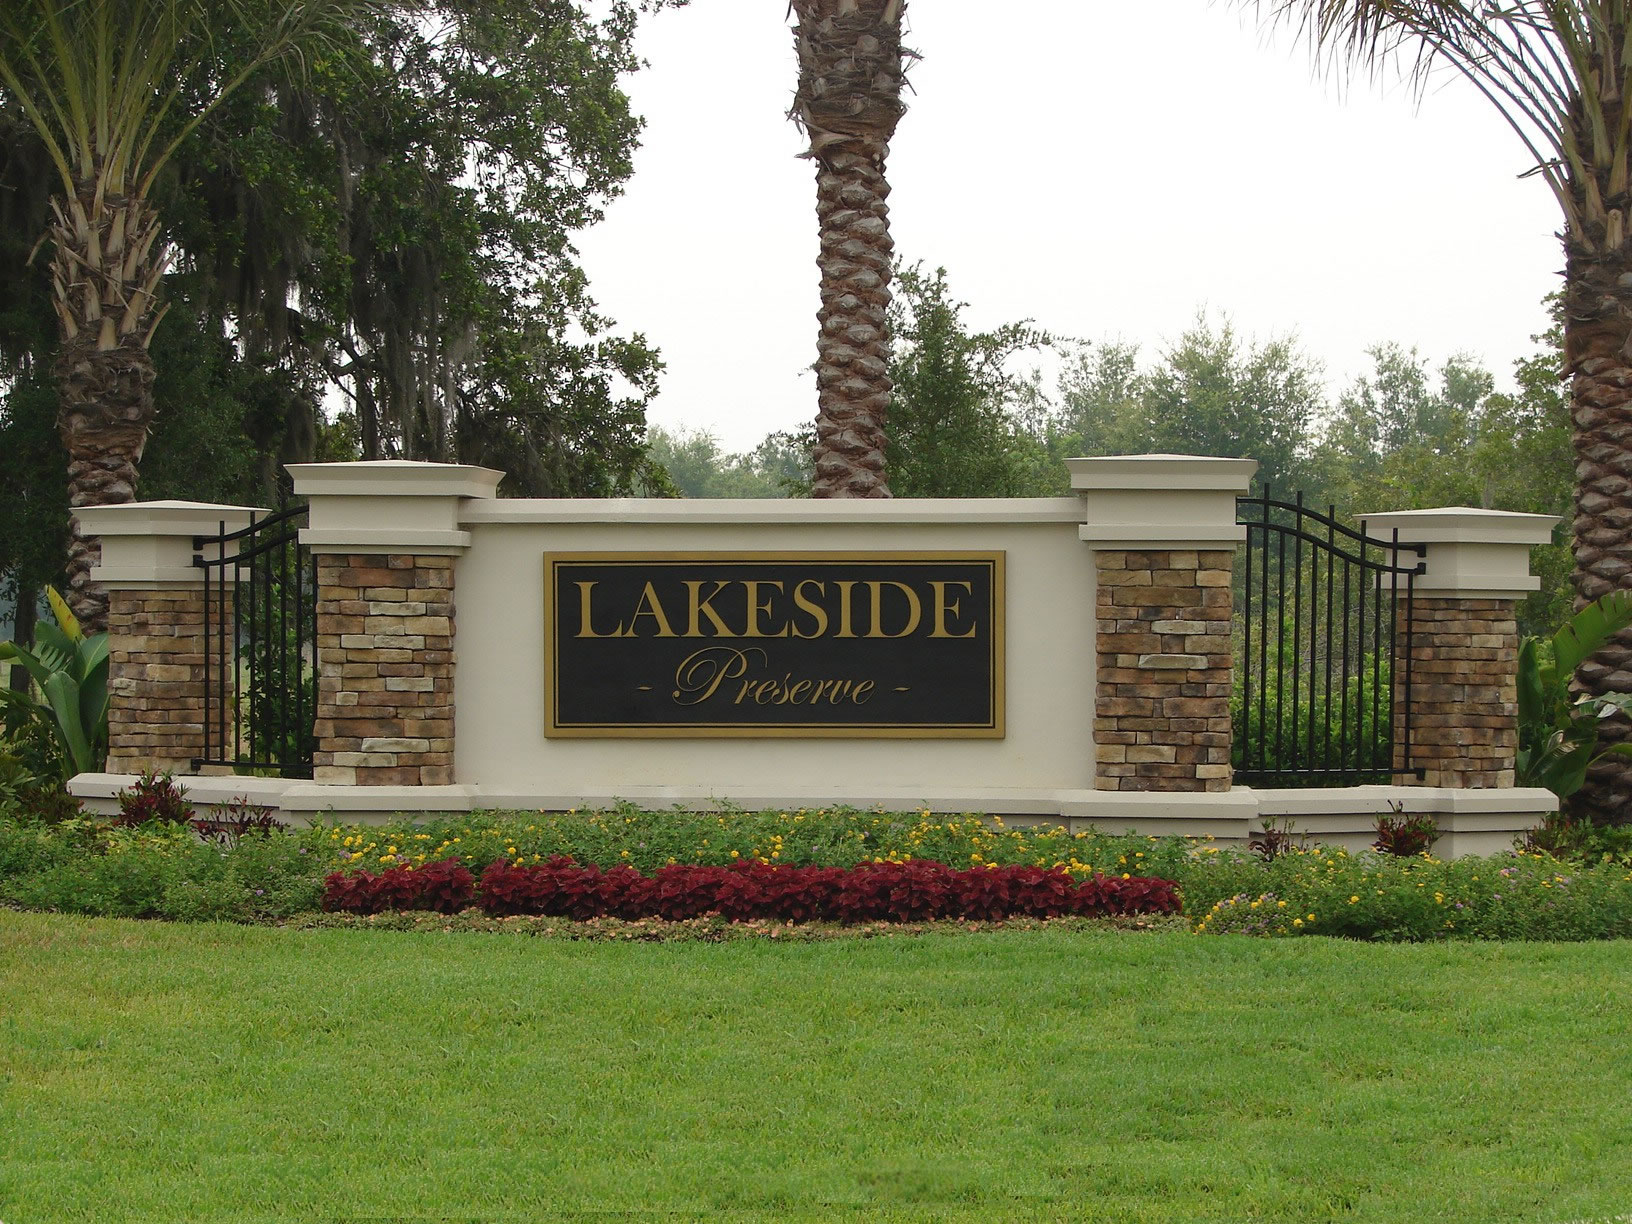 Lakeside Preserve Entrance Sign